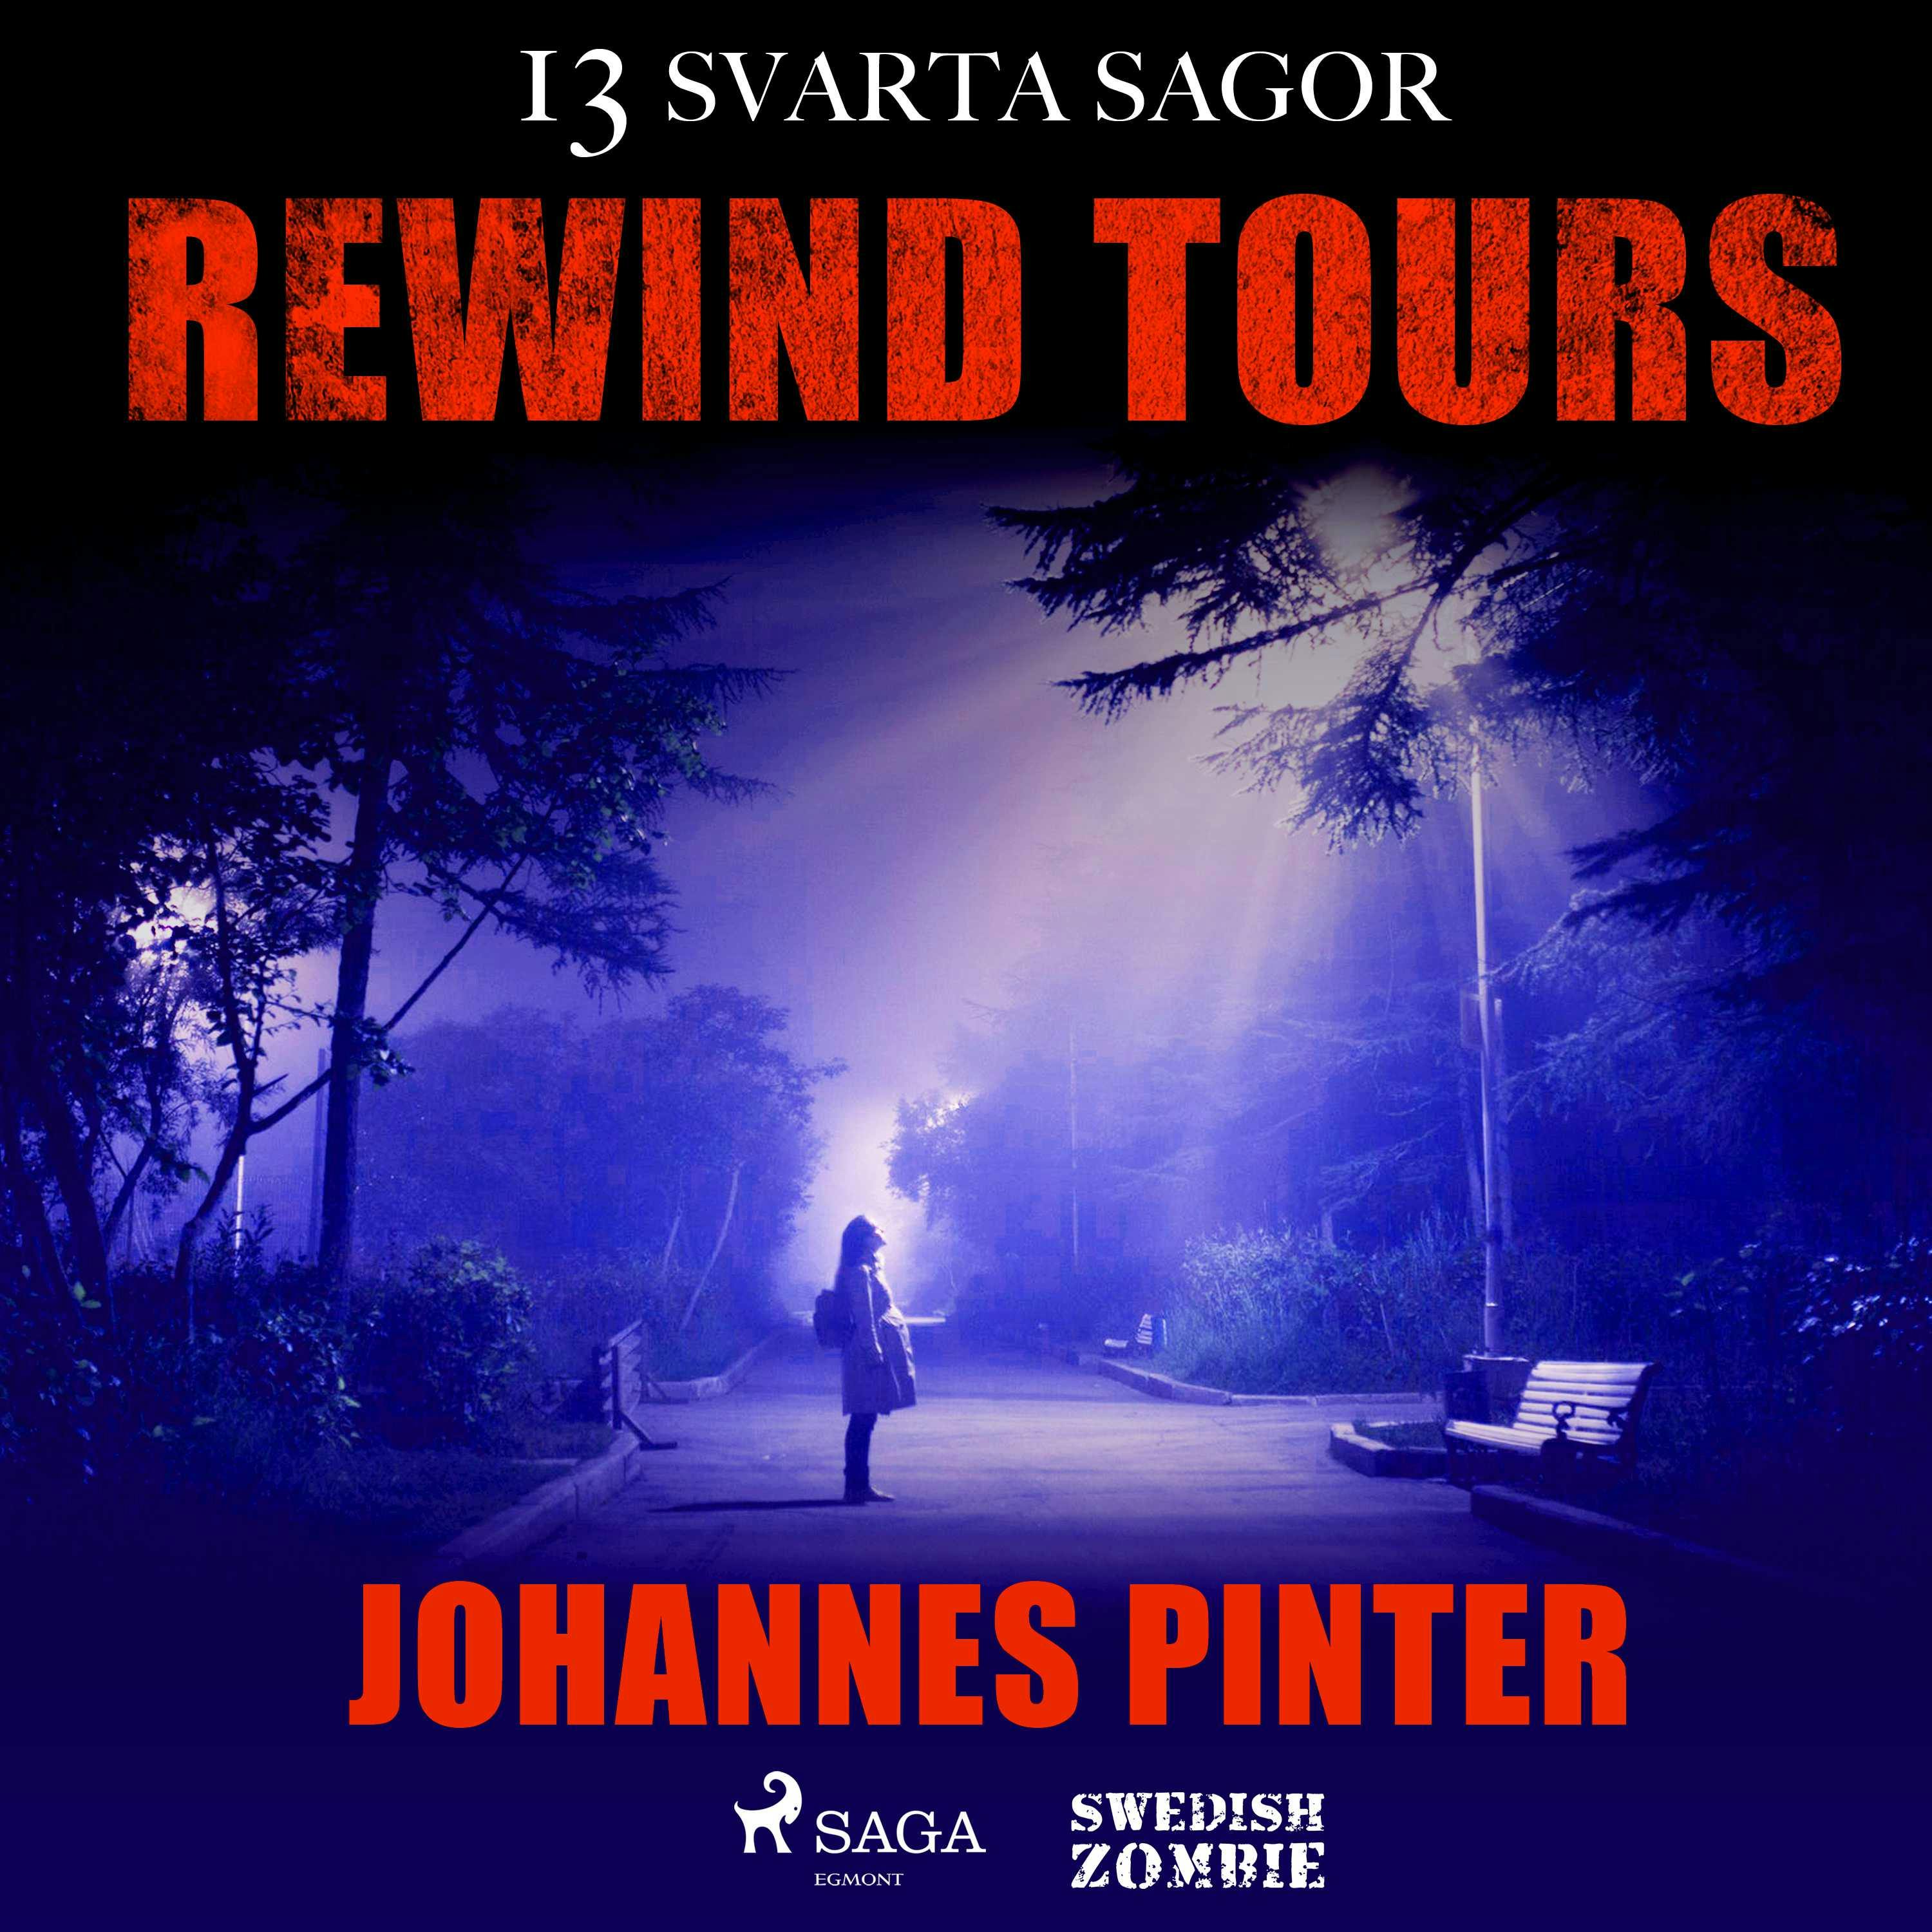 Rewind tours - Johannes Pinter